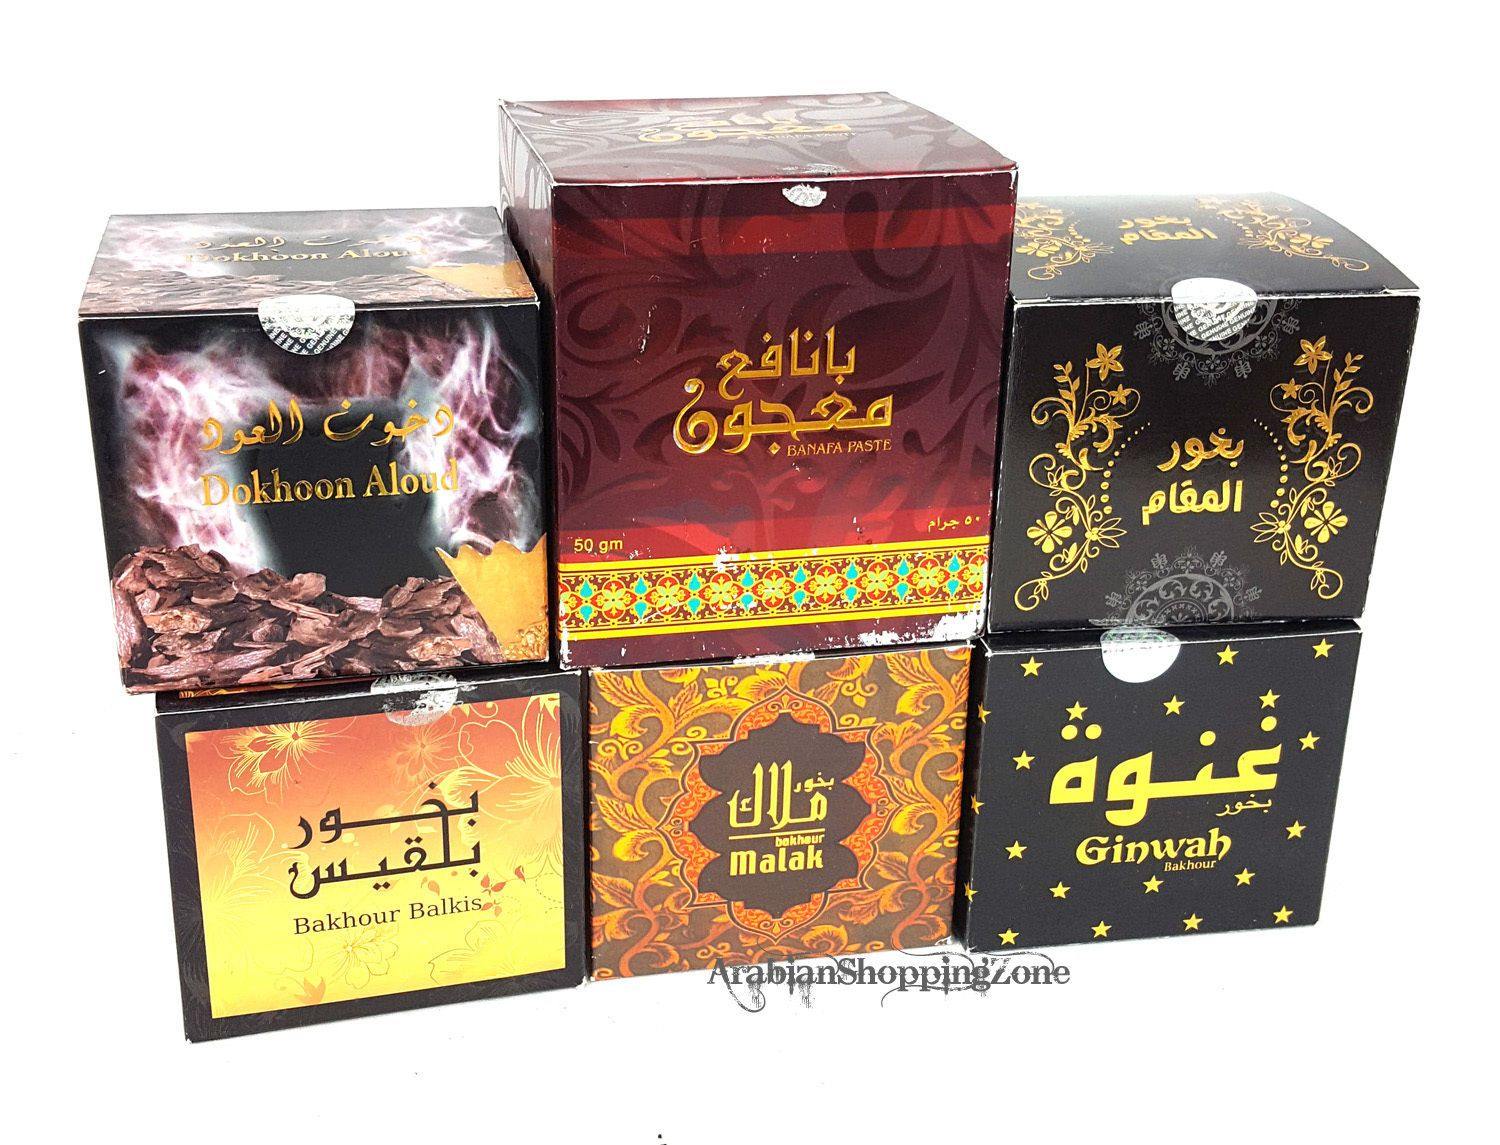 Banafa Arabian Incense High Quality Burning BAKHOOR Fragrance 50g بخور بانافع - Arabian Shopping Zone